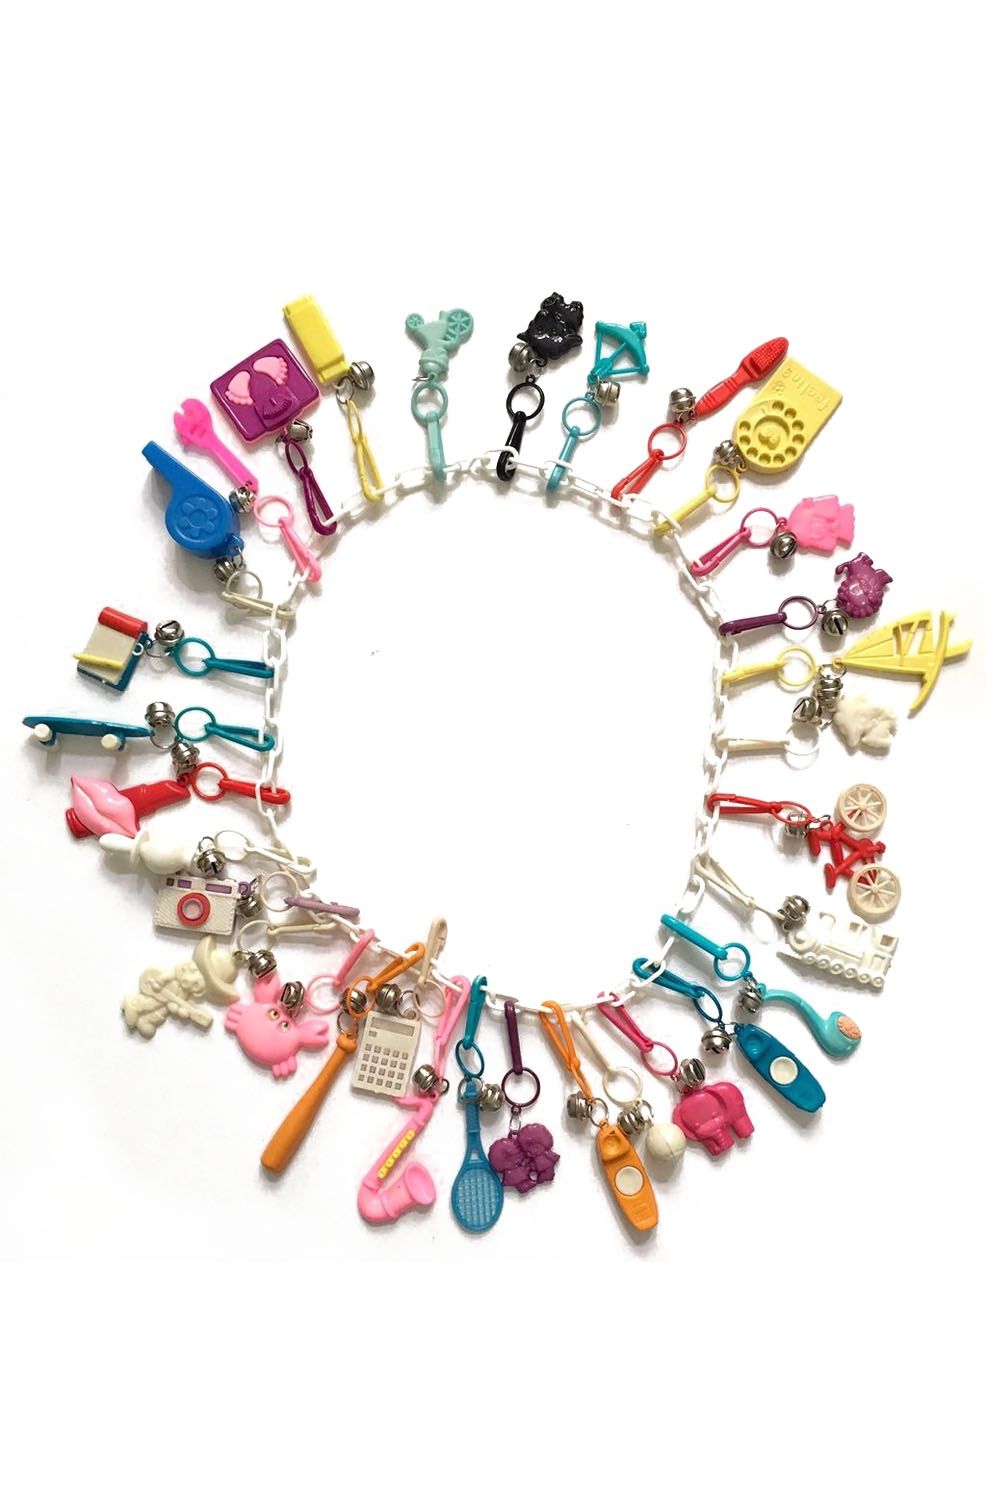 discount 89% NoName other-accesories Multicolored Single WOMEN FASHION Accessories Other-accesories Multicolored 